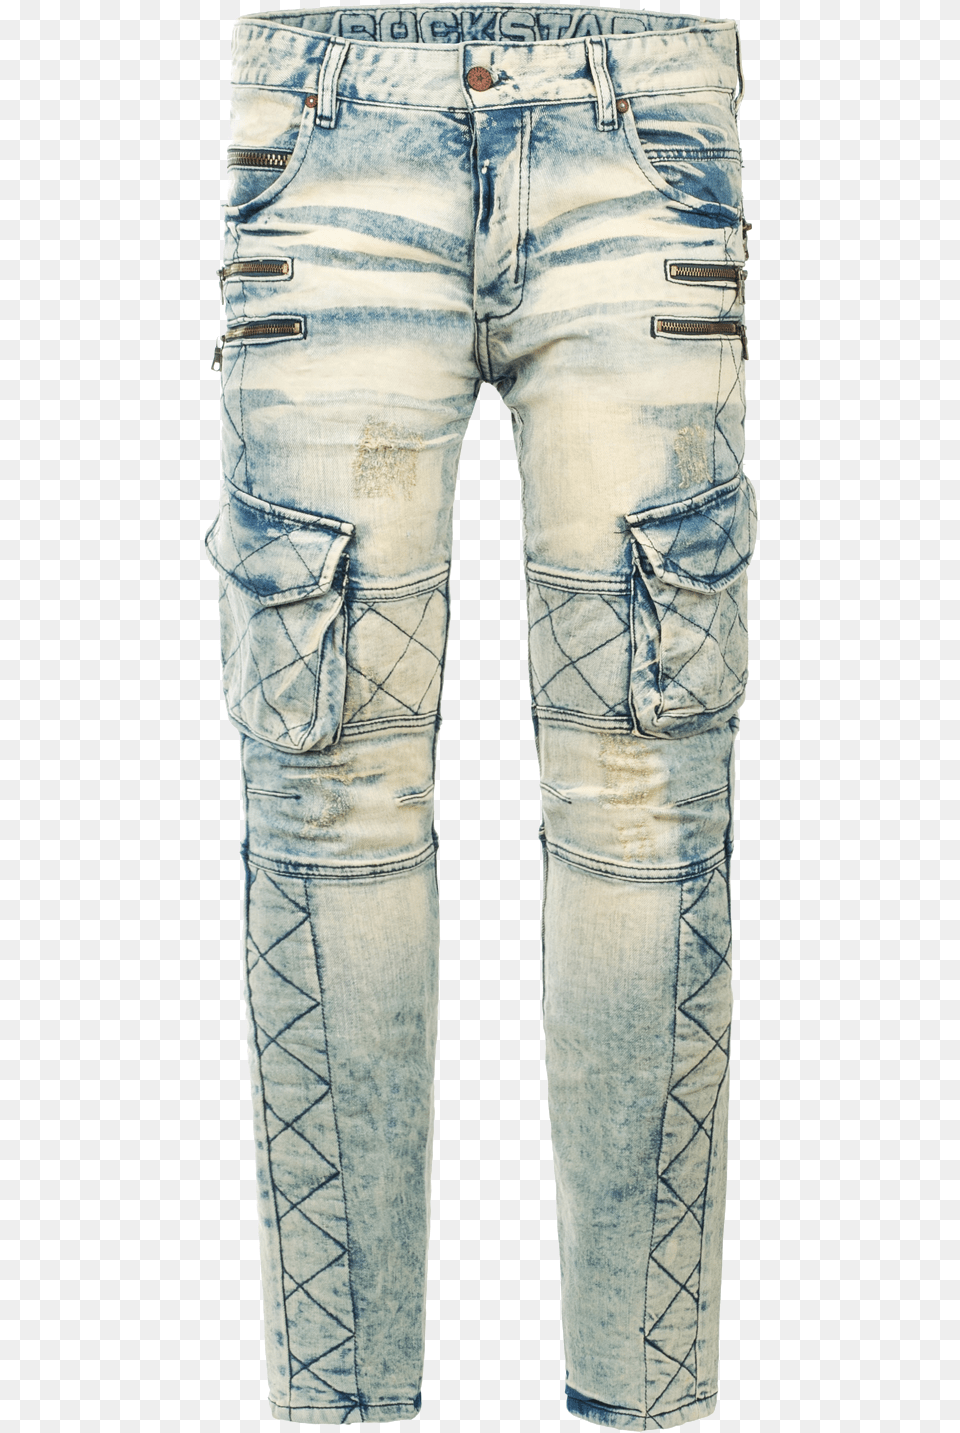 Biker Jeans Image With Pocket, Clothing, Pants Free Transparent Png